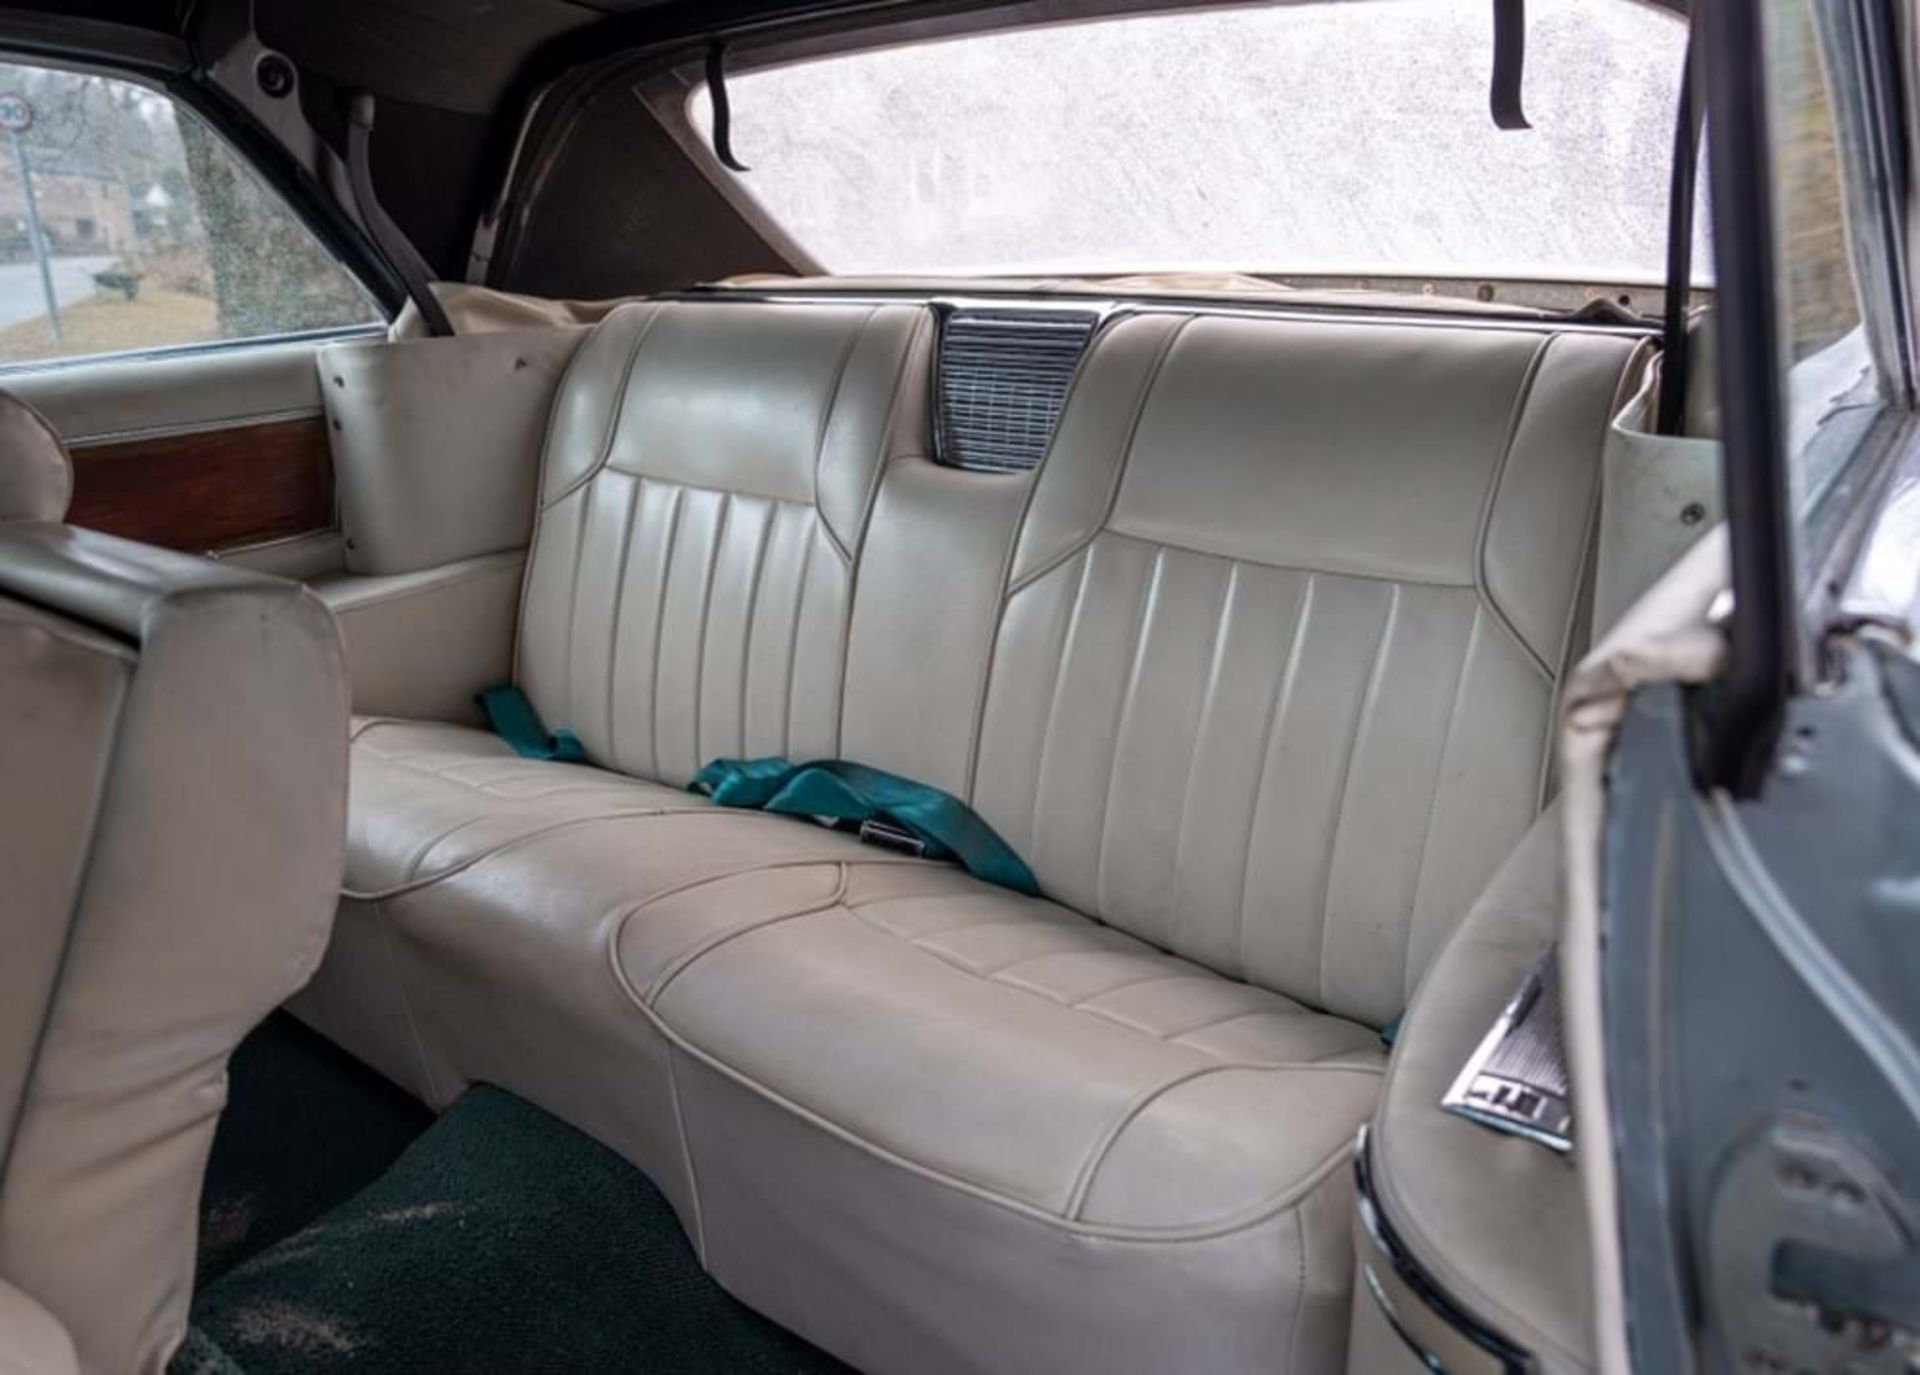 1964 Cadillac Eldorado Biarritz Convertible - Image 4 of 10